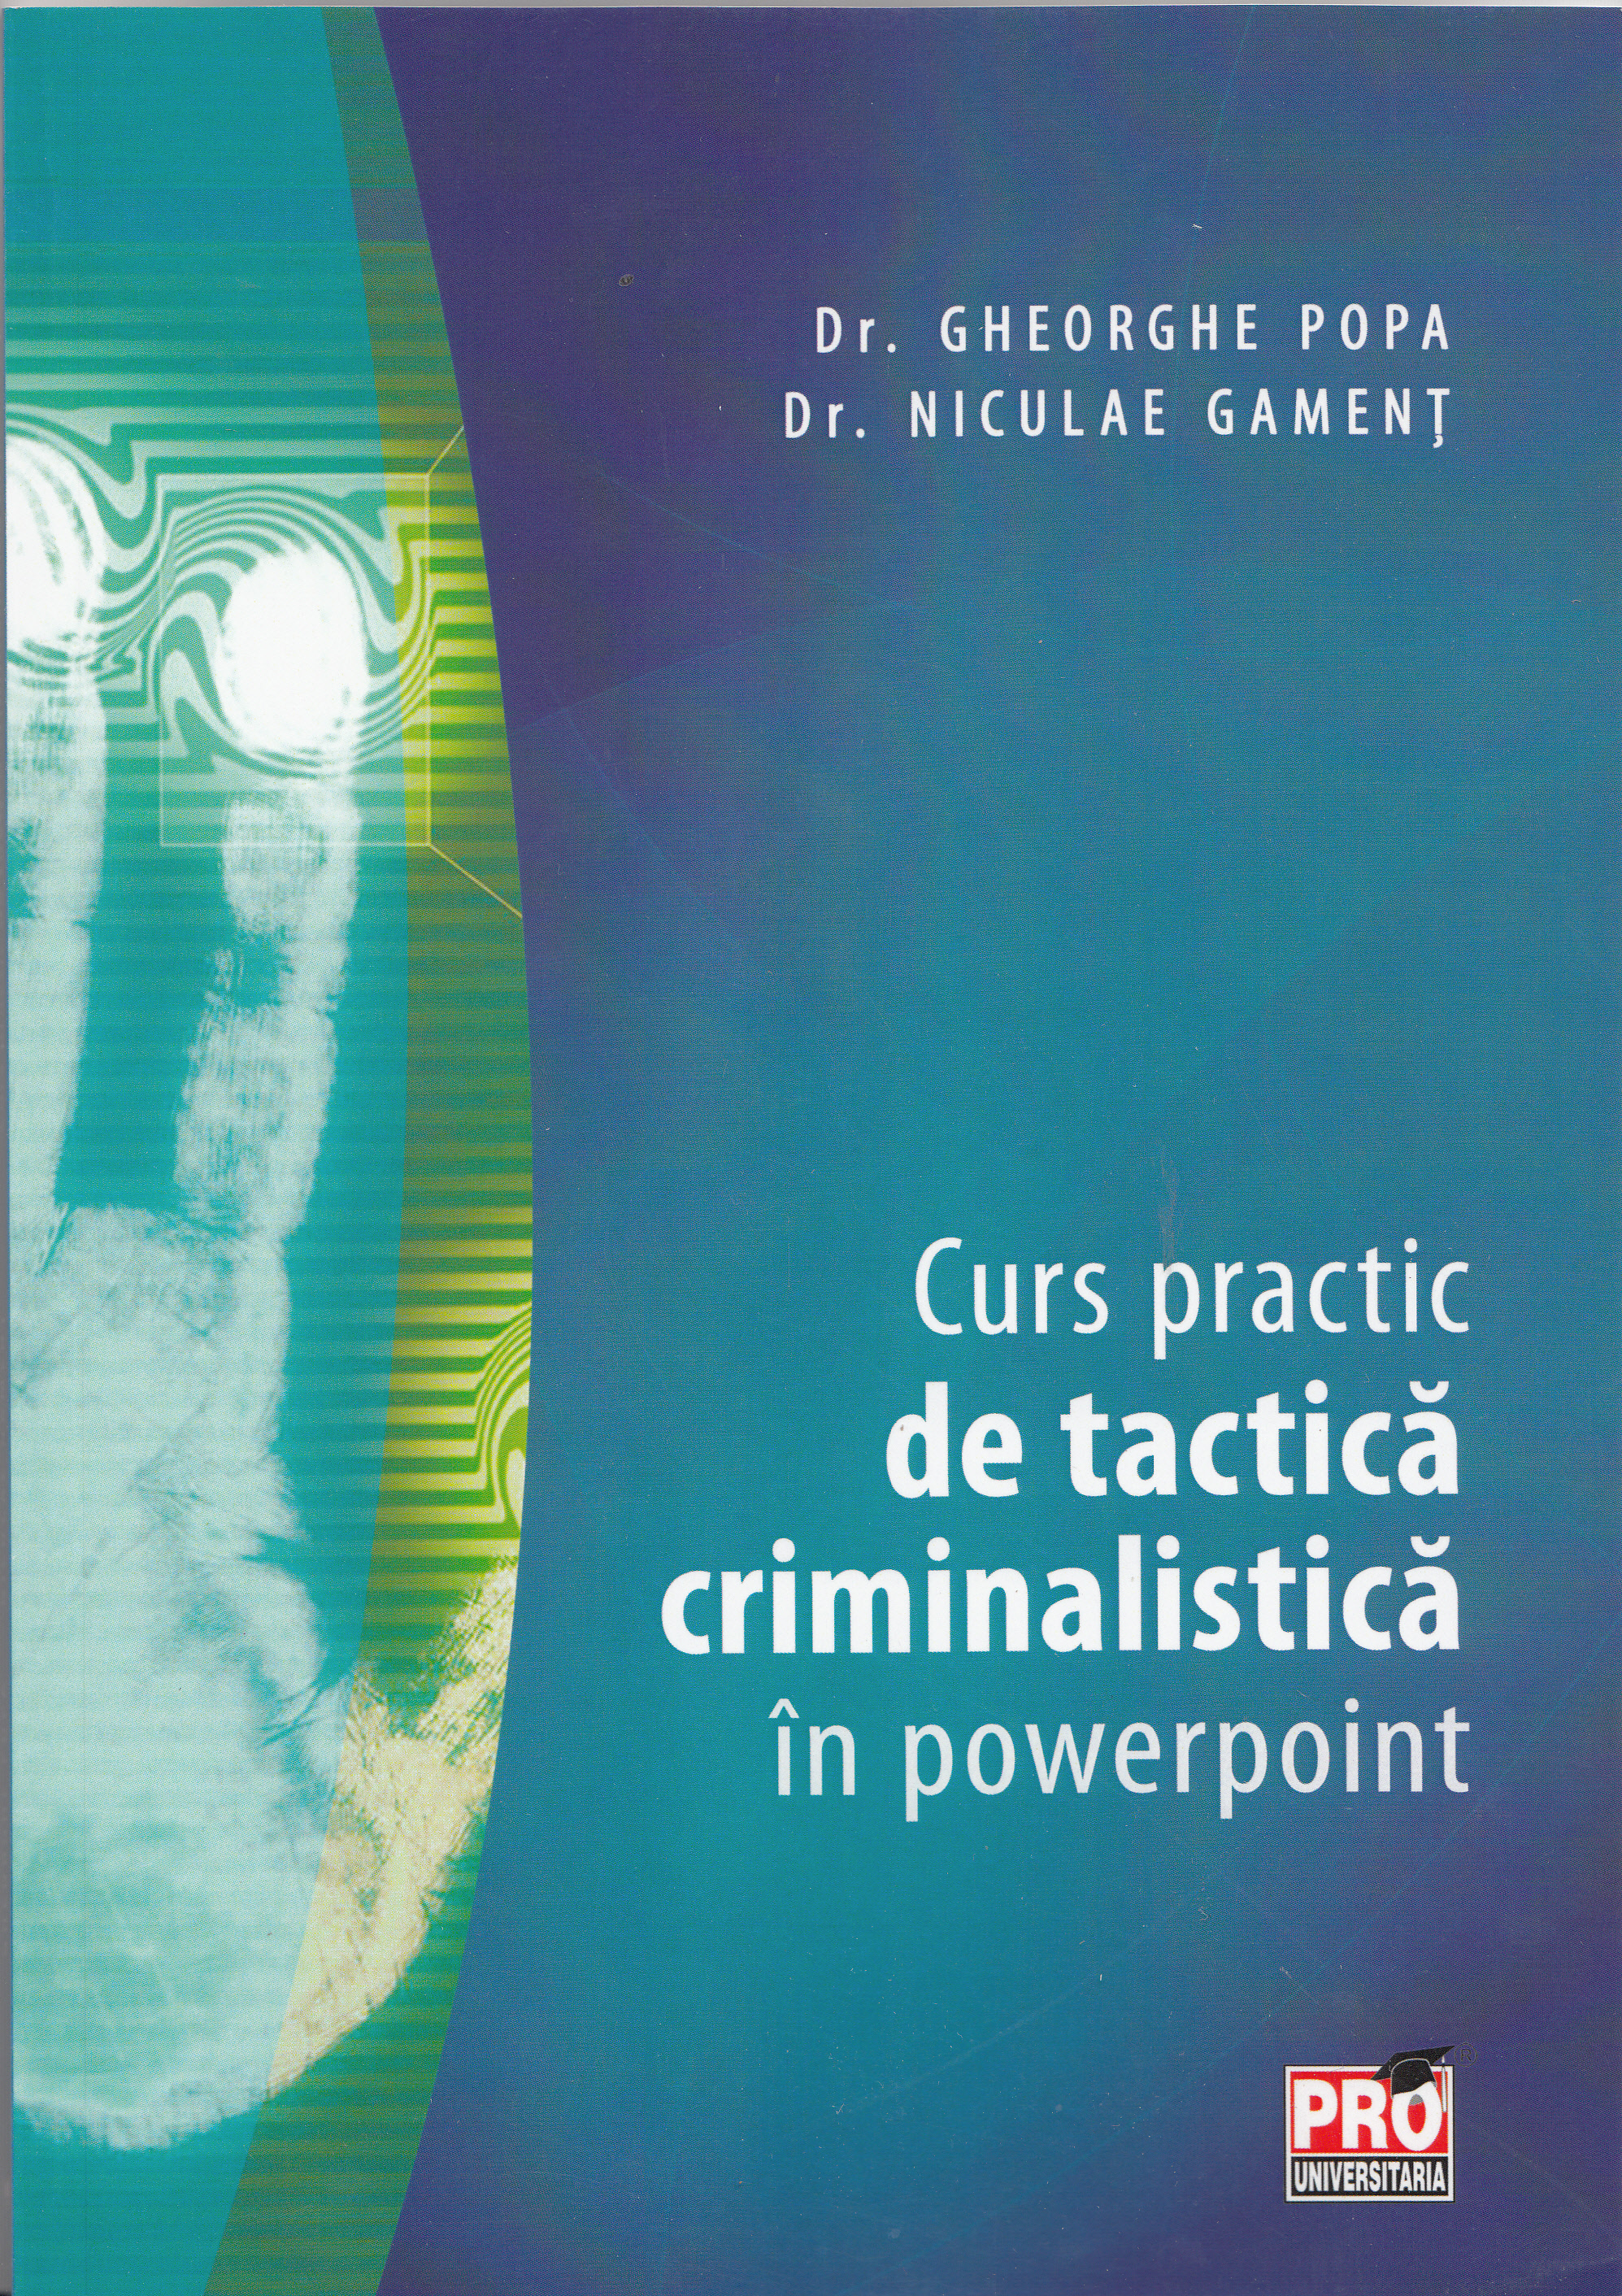 Curs practic de tactica criminalistica in powerpoint - Gheorghe Popa, Niculae Gament